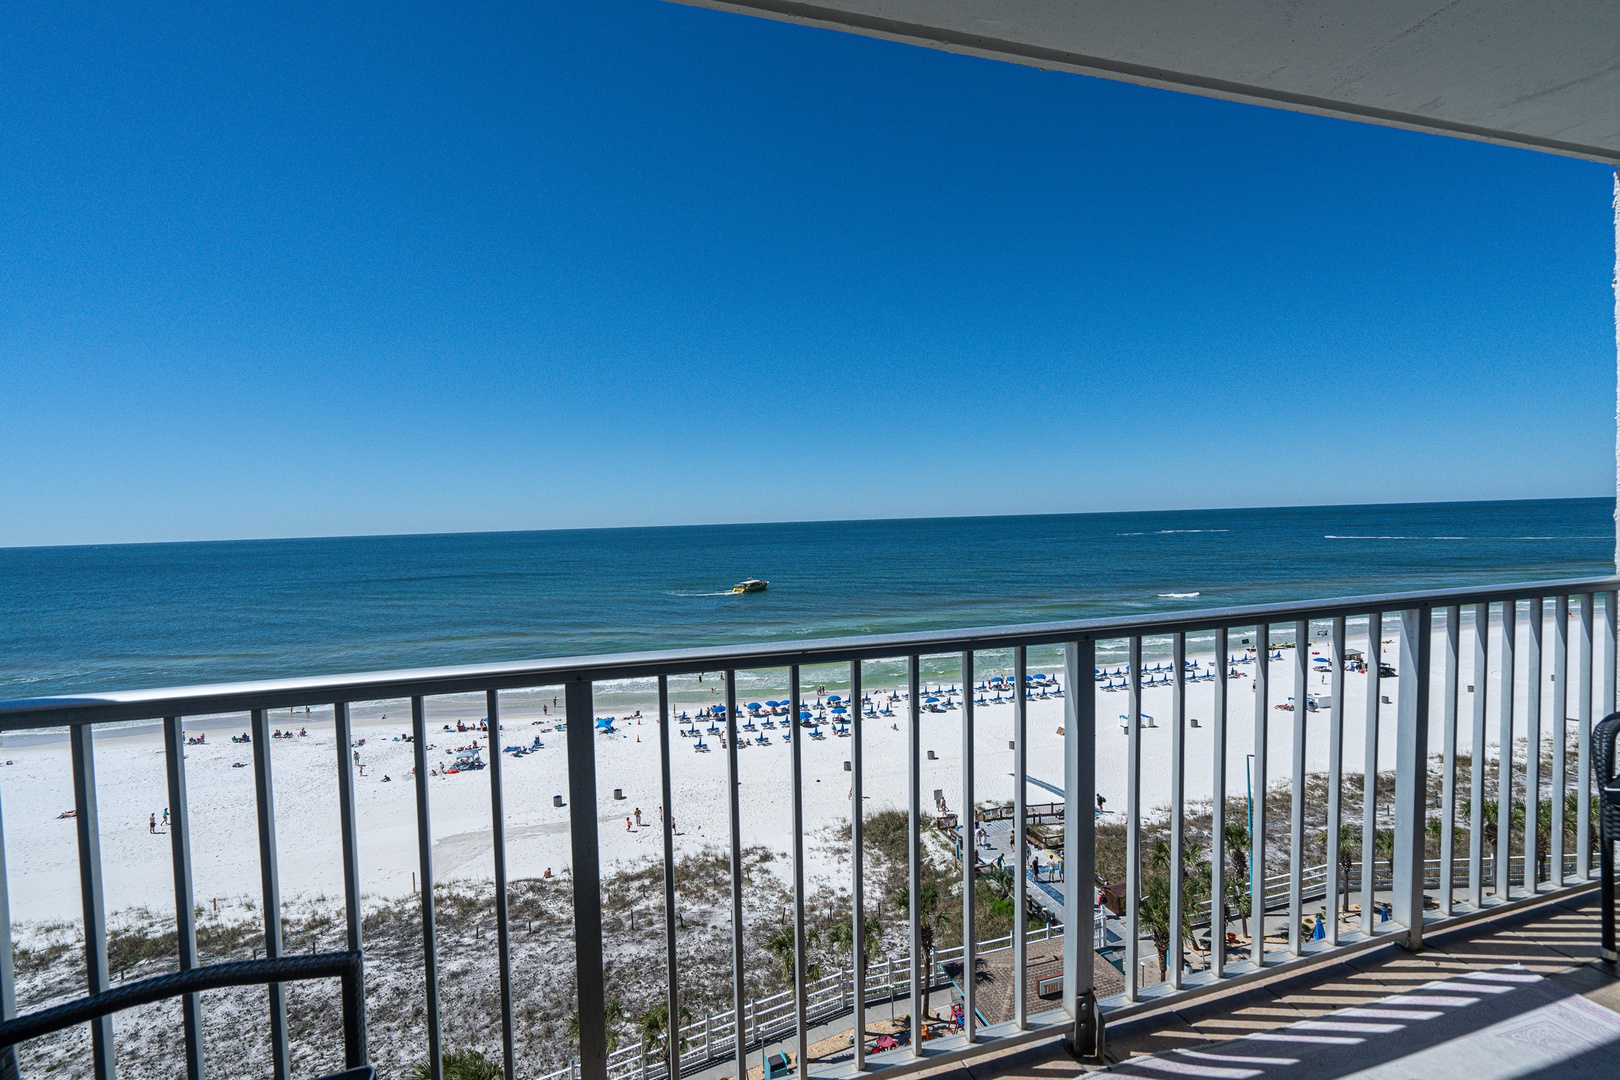 Retreat to the deck and enjoy vistas of the beach